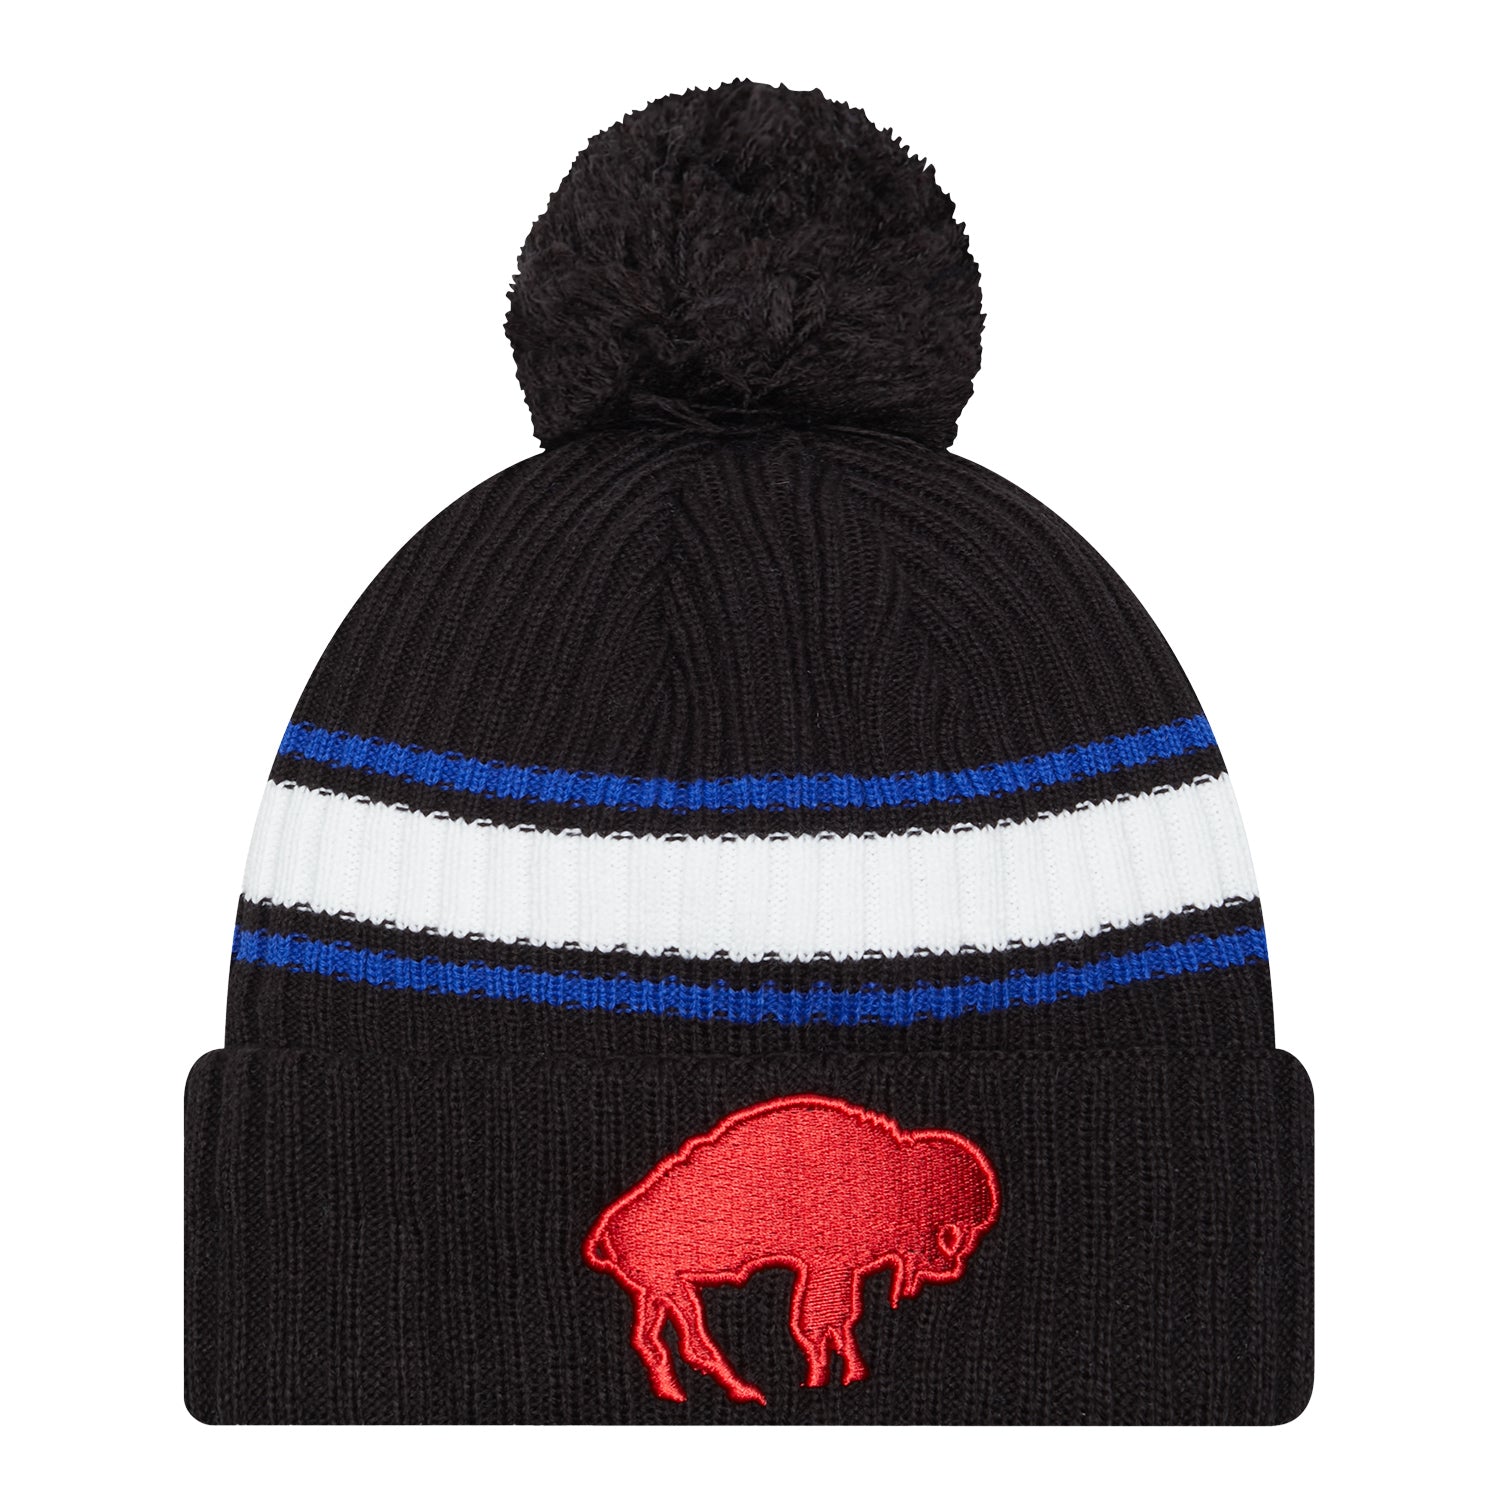 Buffalo Bills Winter Hats | The Bills Store